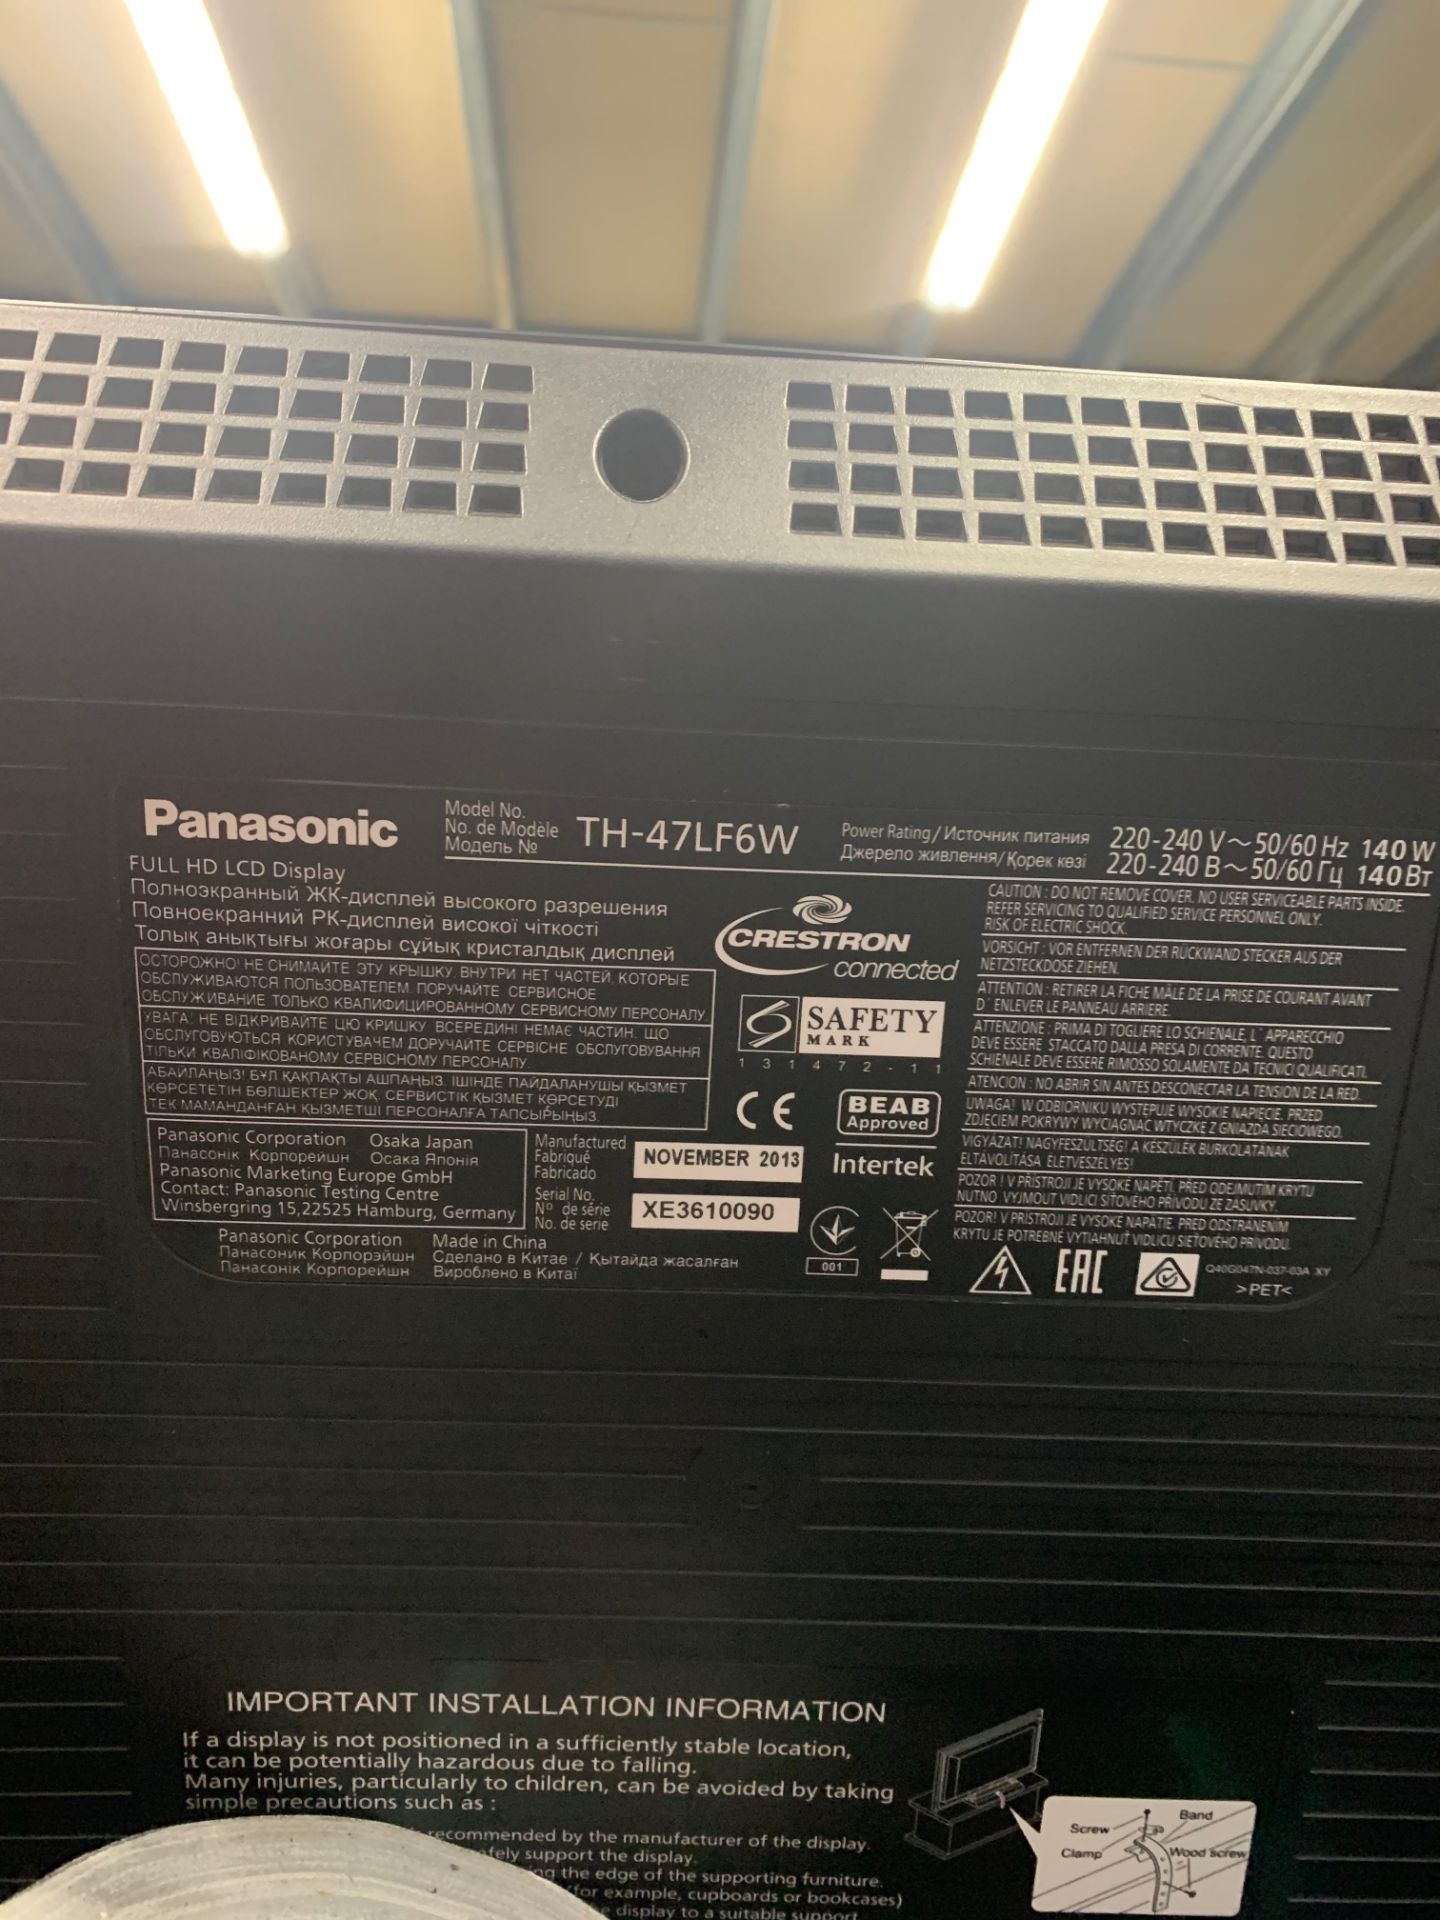 Panasonic 47" Full HD LCD Display TH-47LF6W DOM 11/2013 Serial No XE3610090 DOM 11/2013 2 HDMI - Image 2 of 4